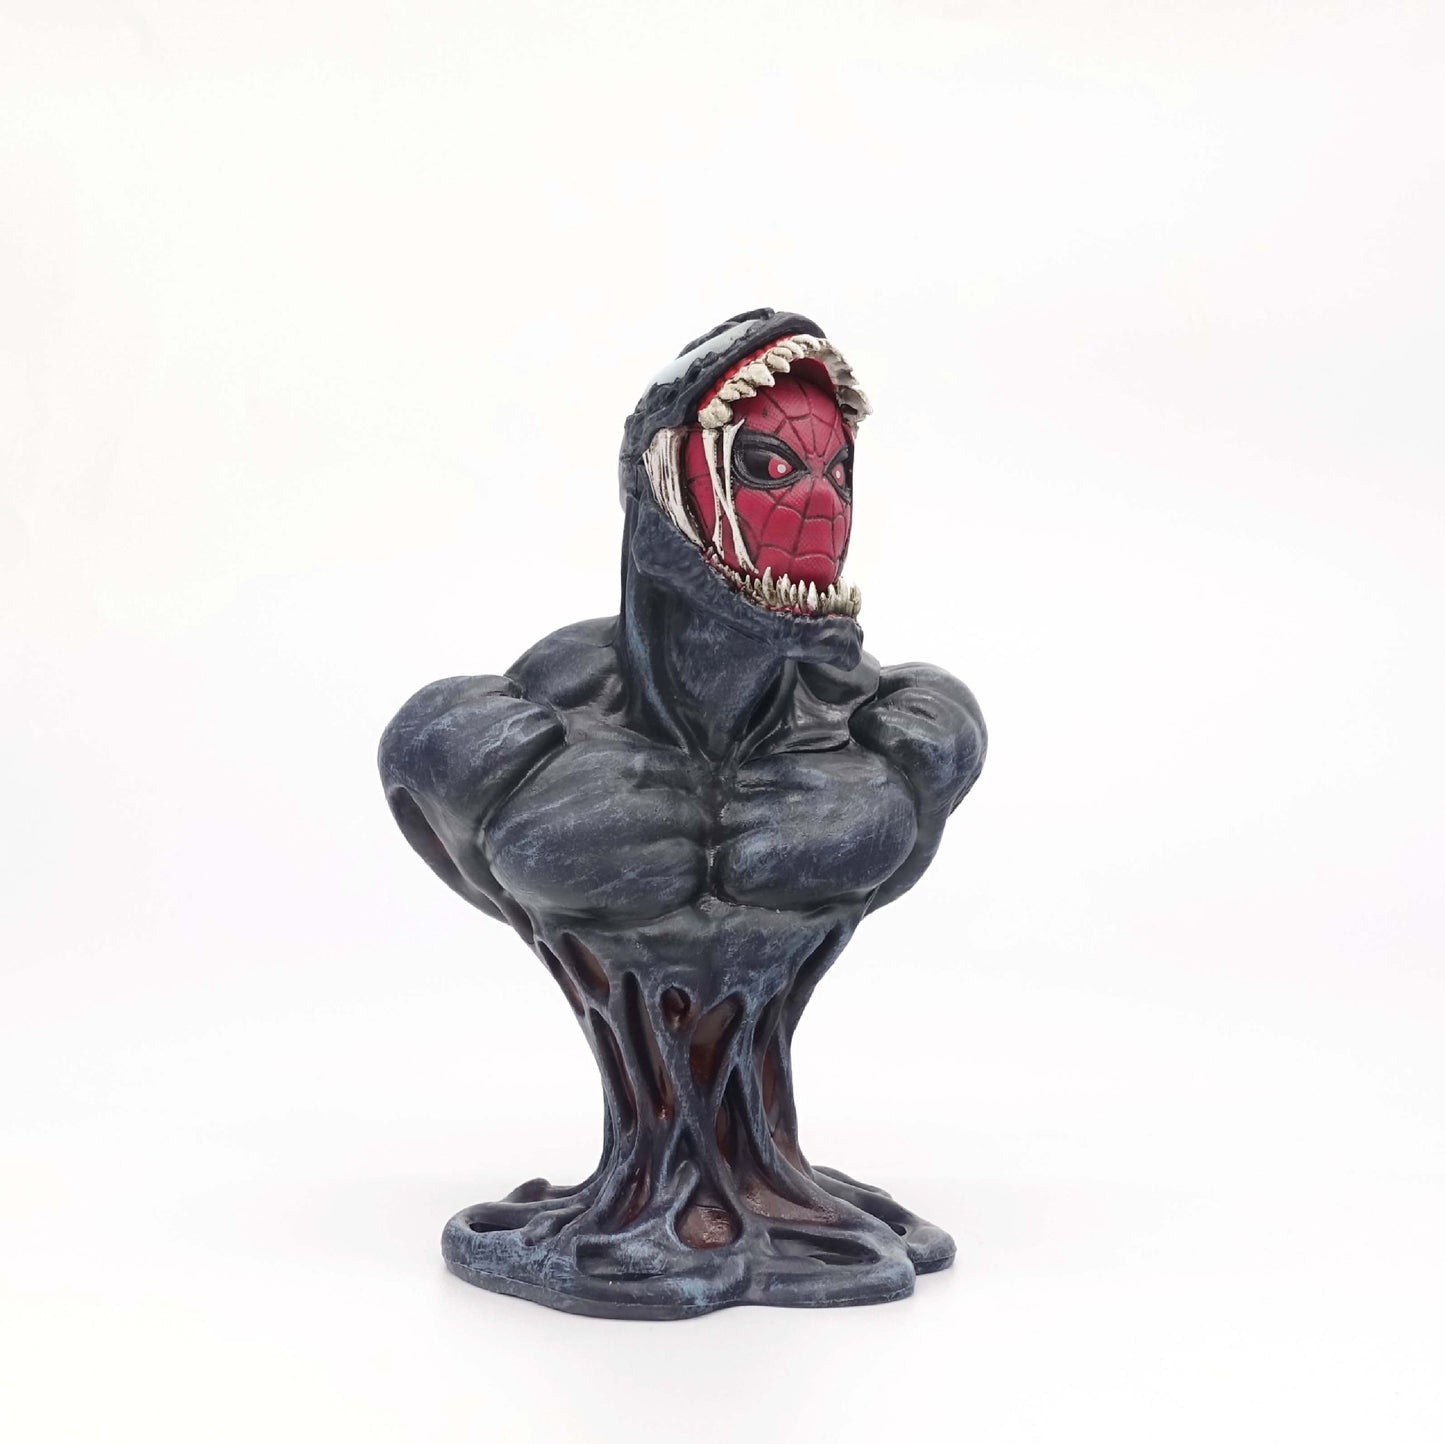 Venom 2 Slaughter Begins Movie Merman Venom Spider-Man Bust Ornaments